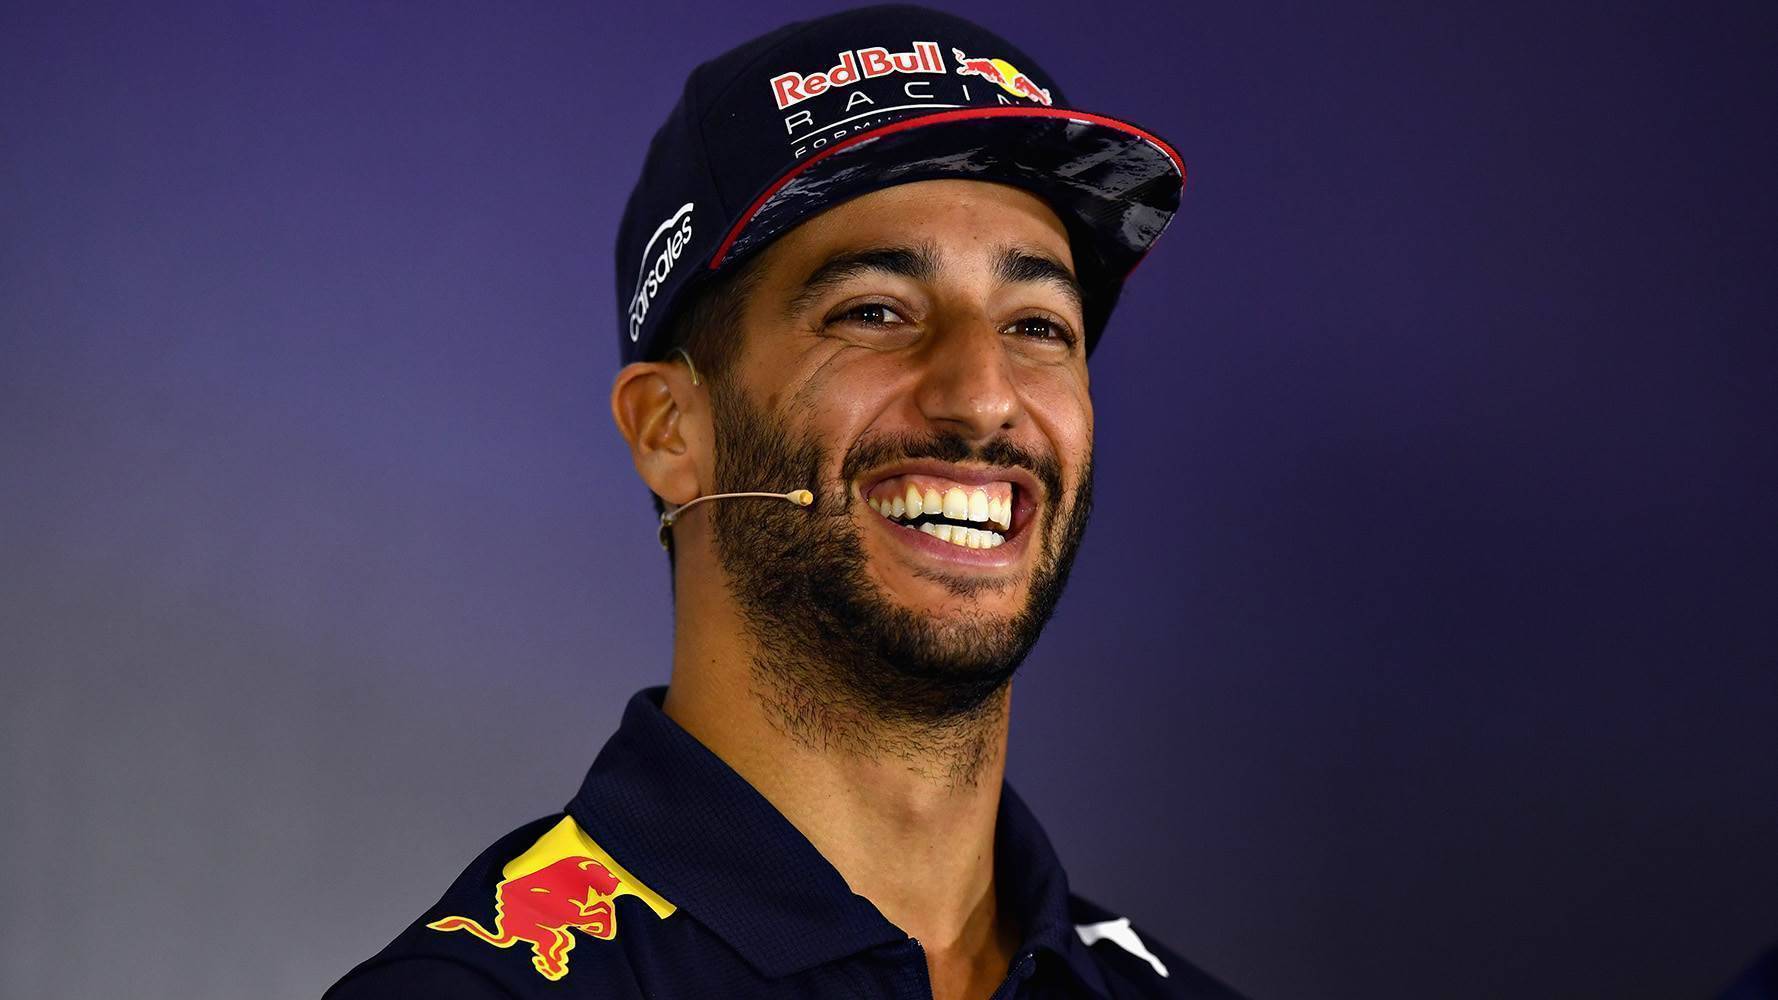 Ricciardo: The king of fair play - Motorsport - Inside Sport